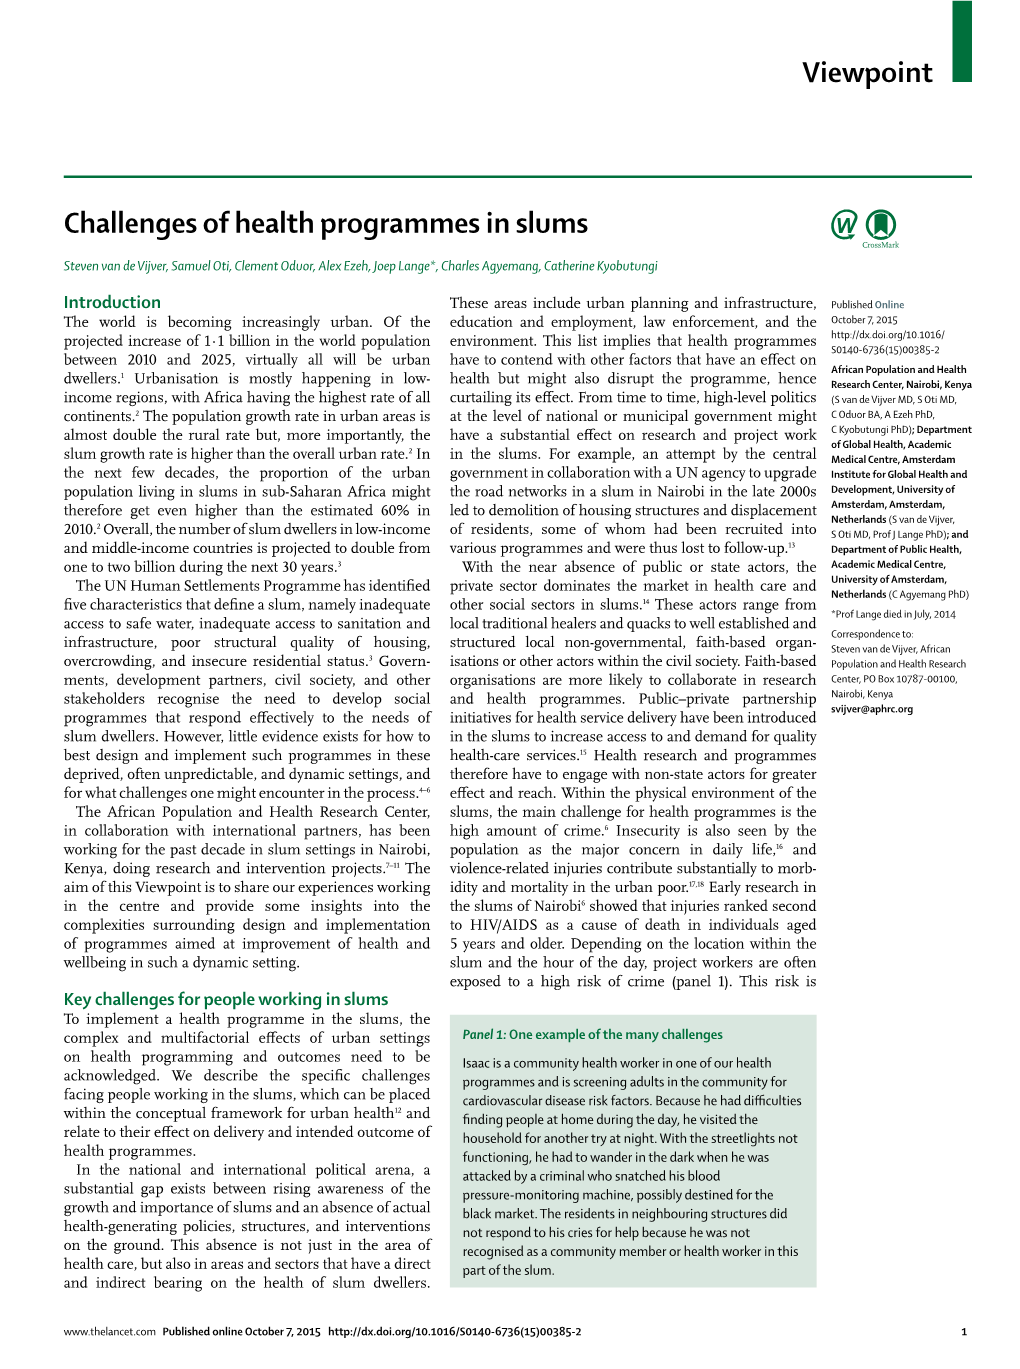 Challenges of Health Programmes in Slums